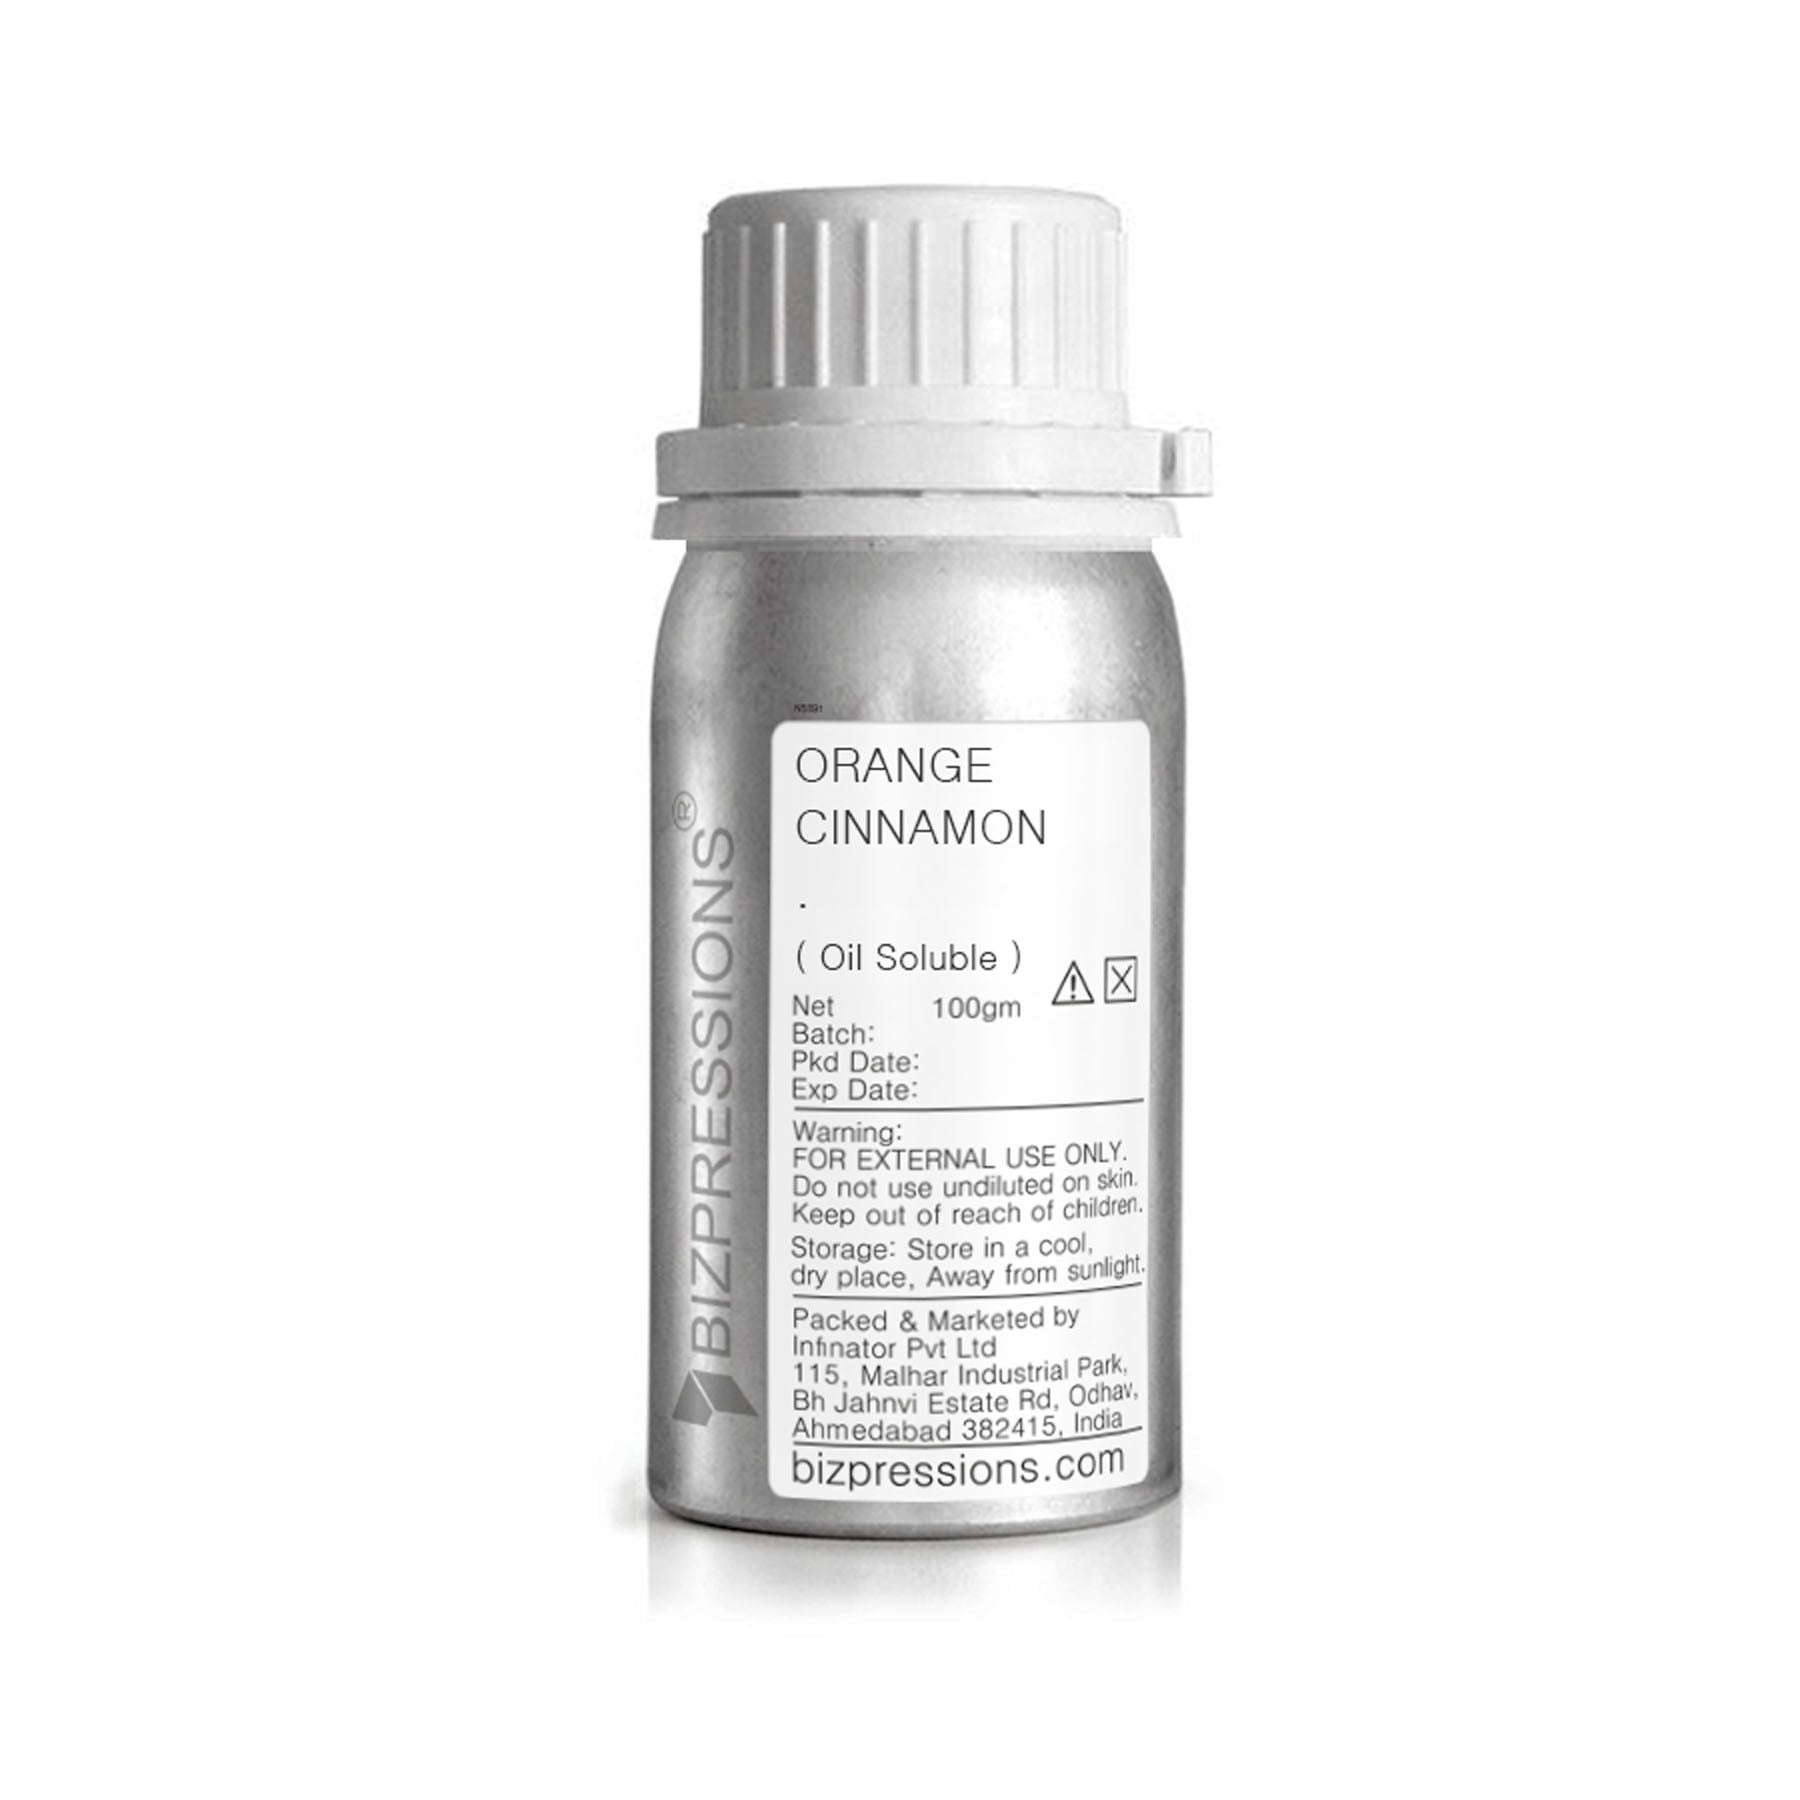 ORANGE CINNAMON - Fragrance ( Oil Soluble ) - 100 gm